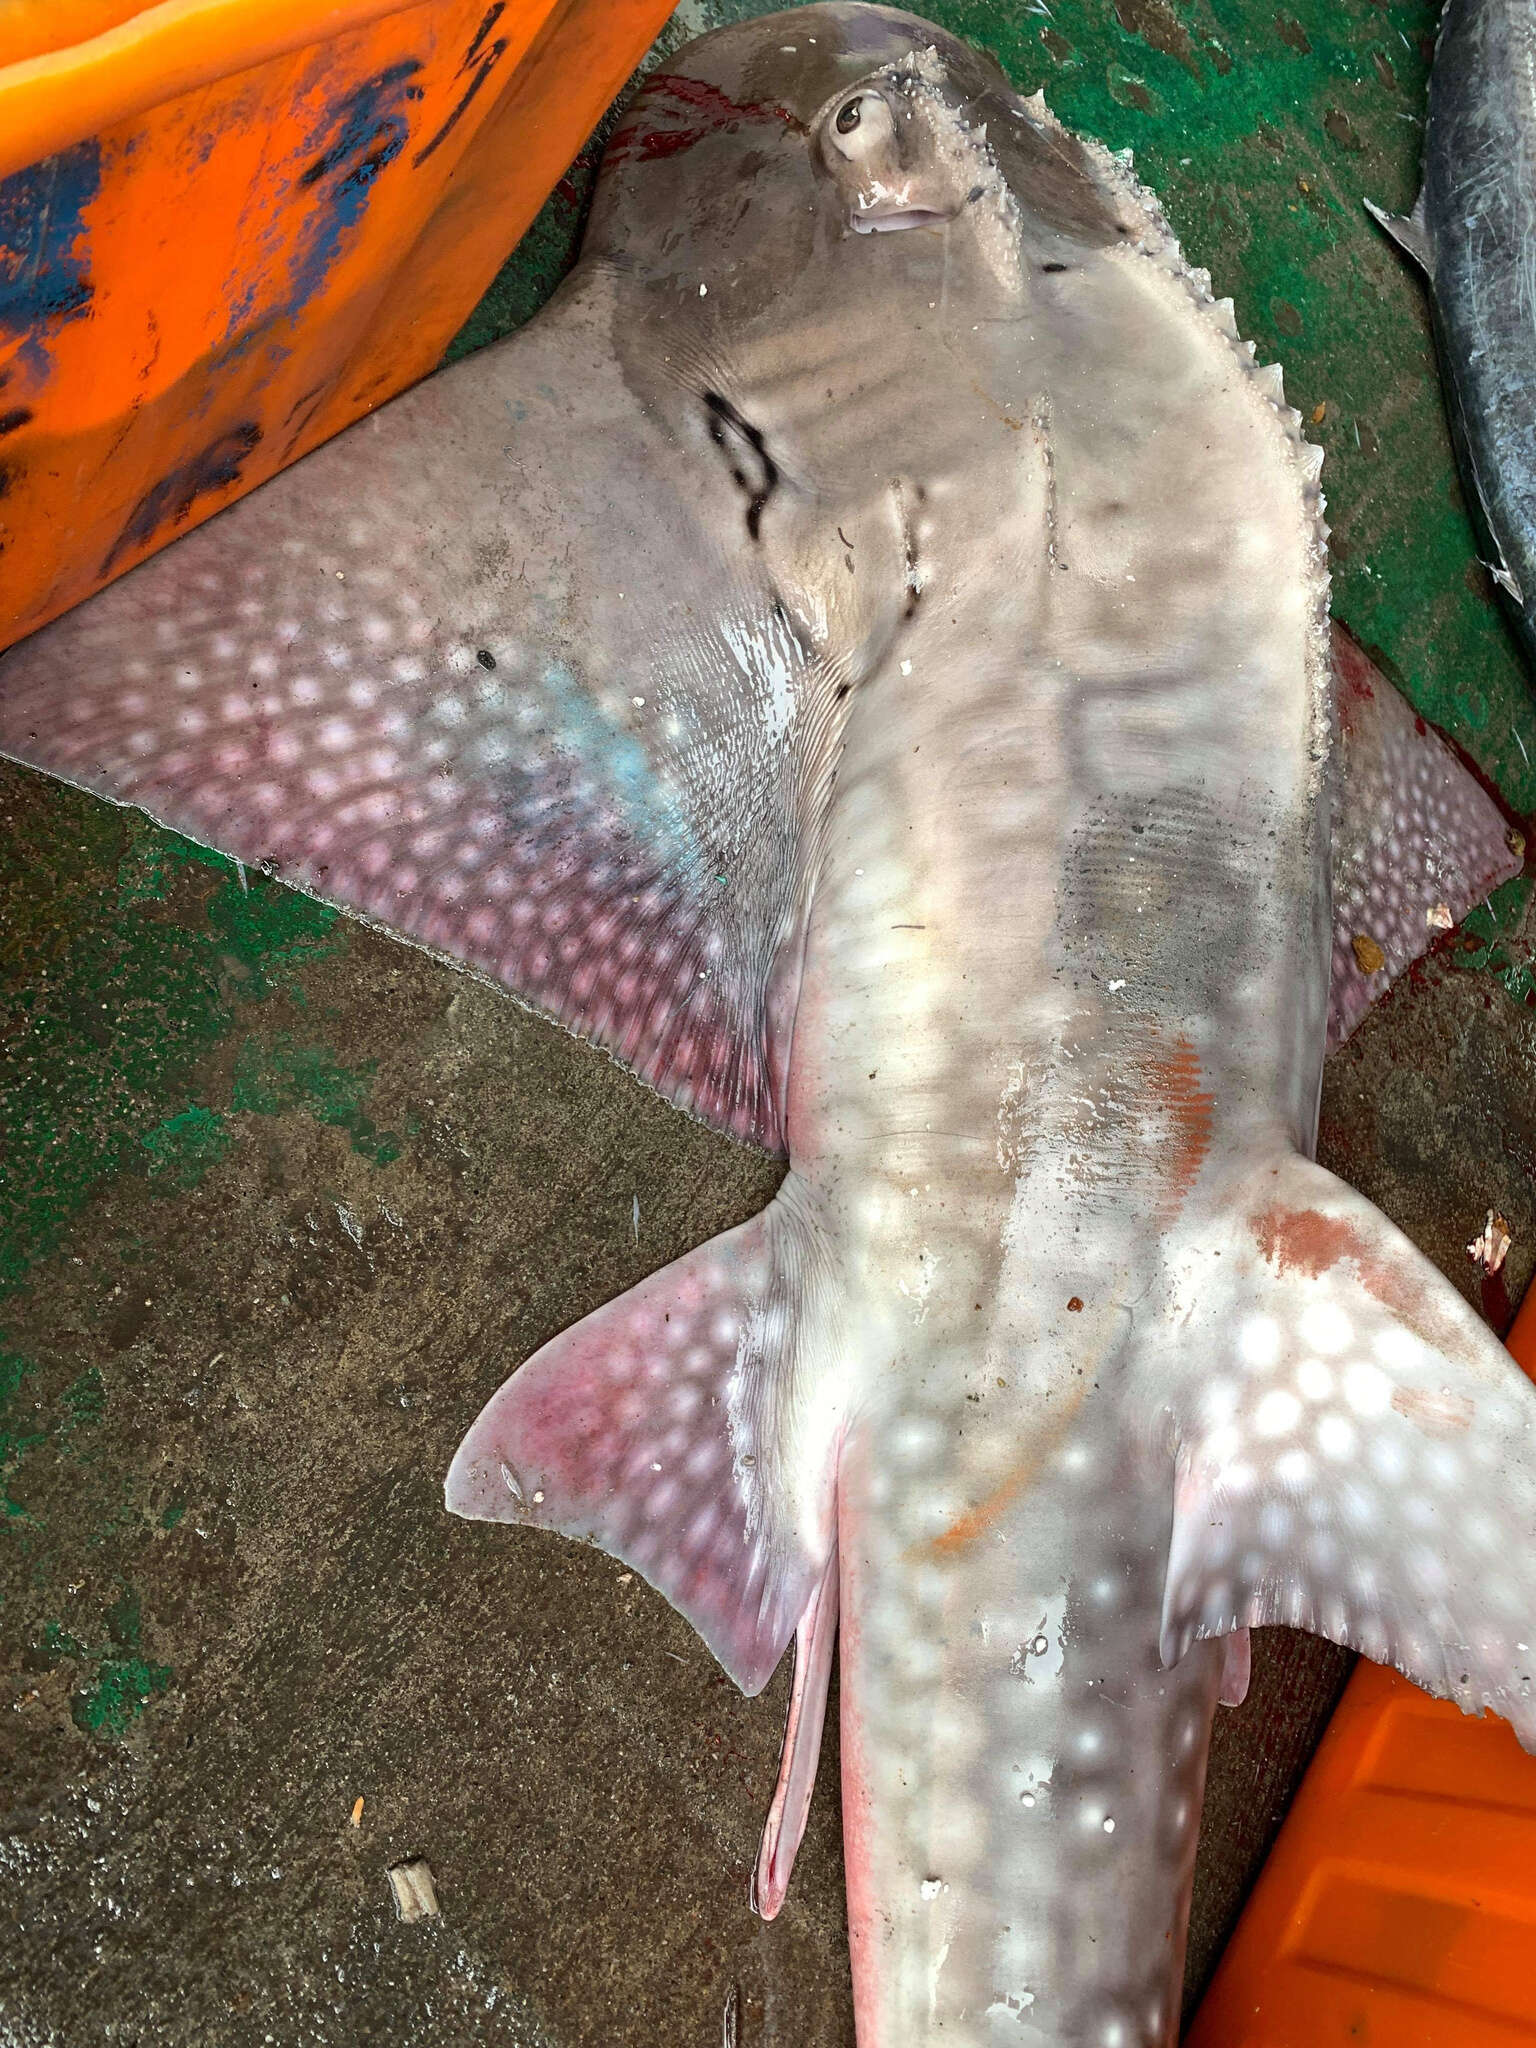 Image of bowmouth guitarfish